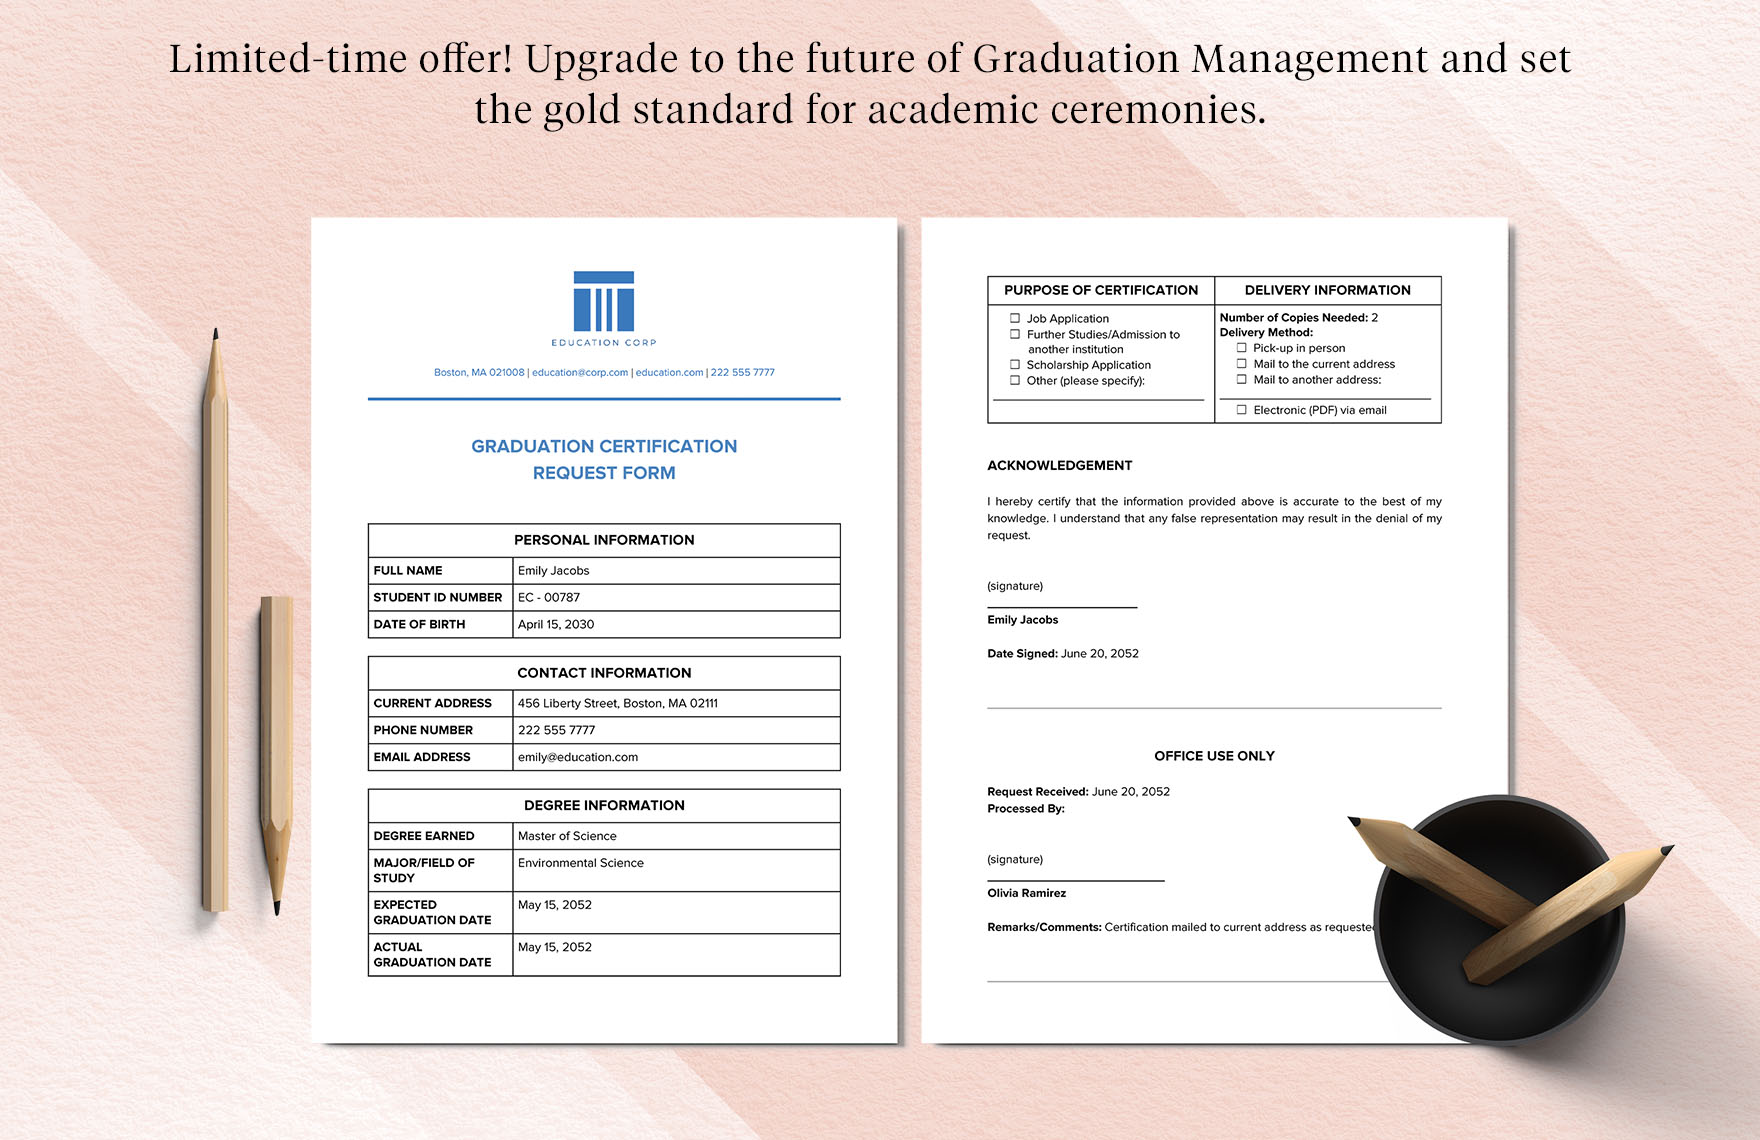 Graduation Certification Request Form Template